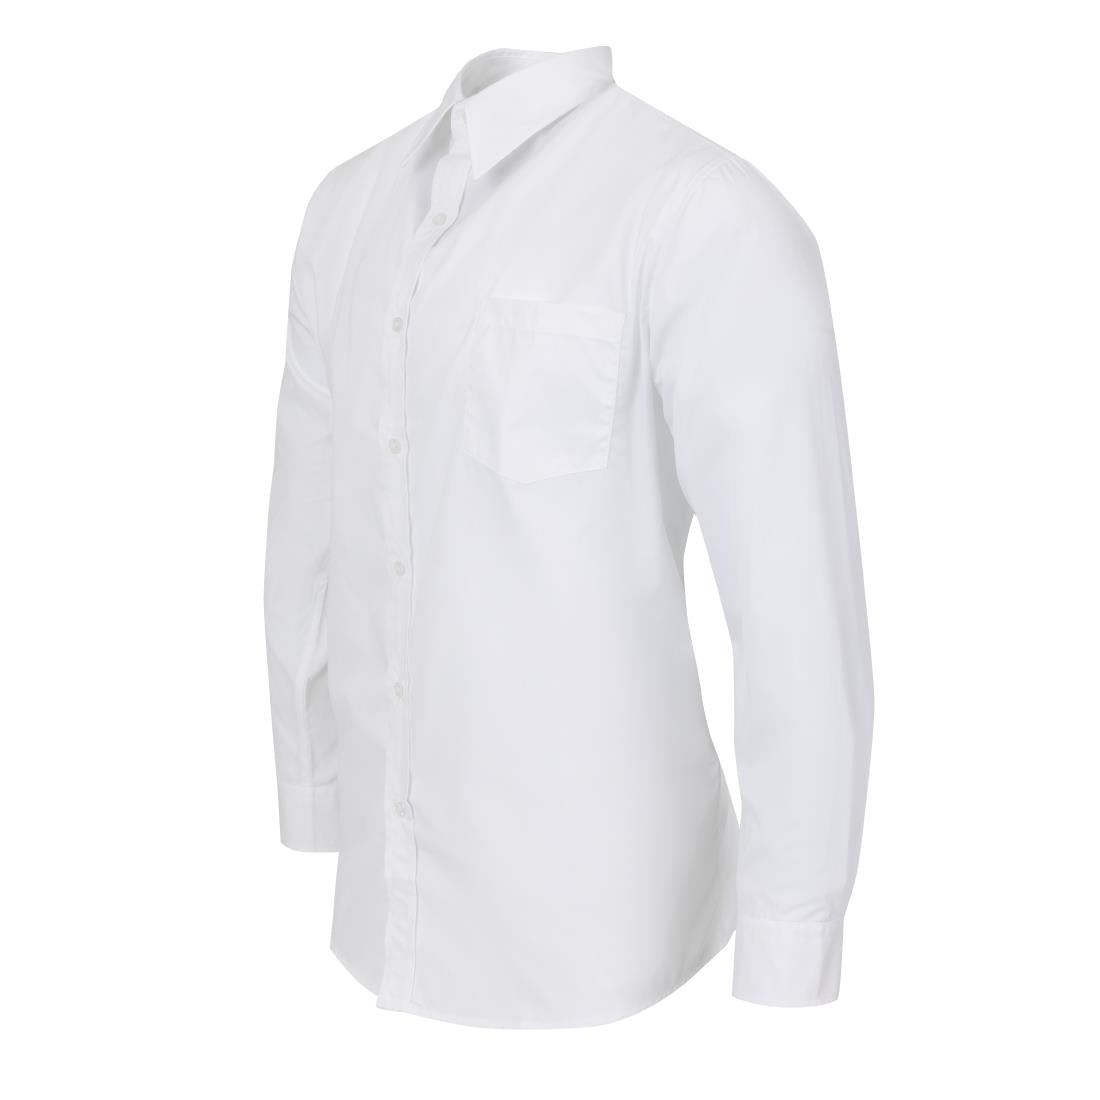 A730-3XL Uniform Works Long Sleeve Shirt White Size 3XL JD Catering Equipment Solutions Ltd